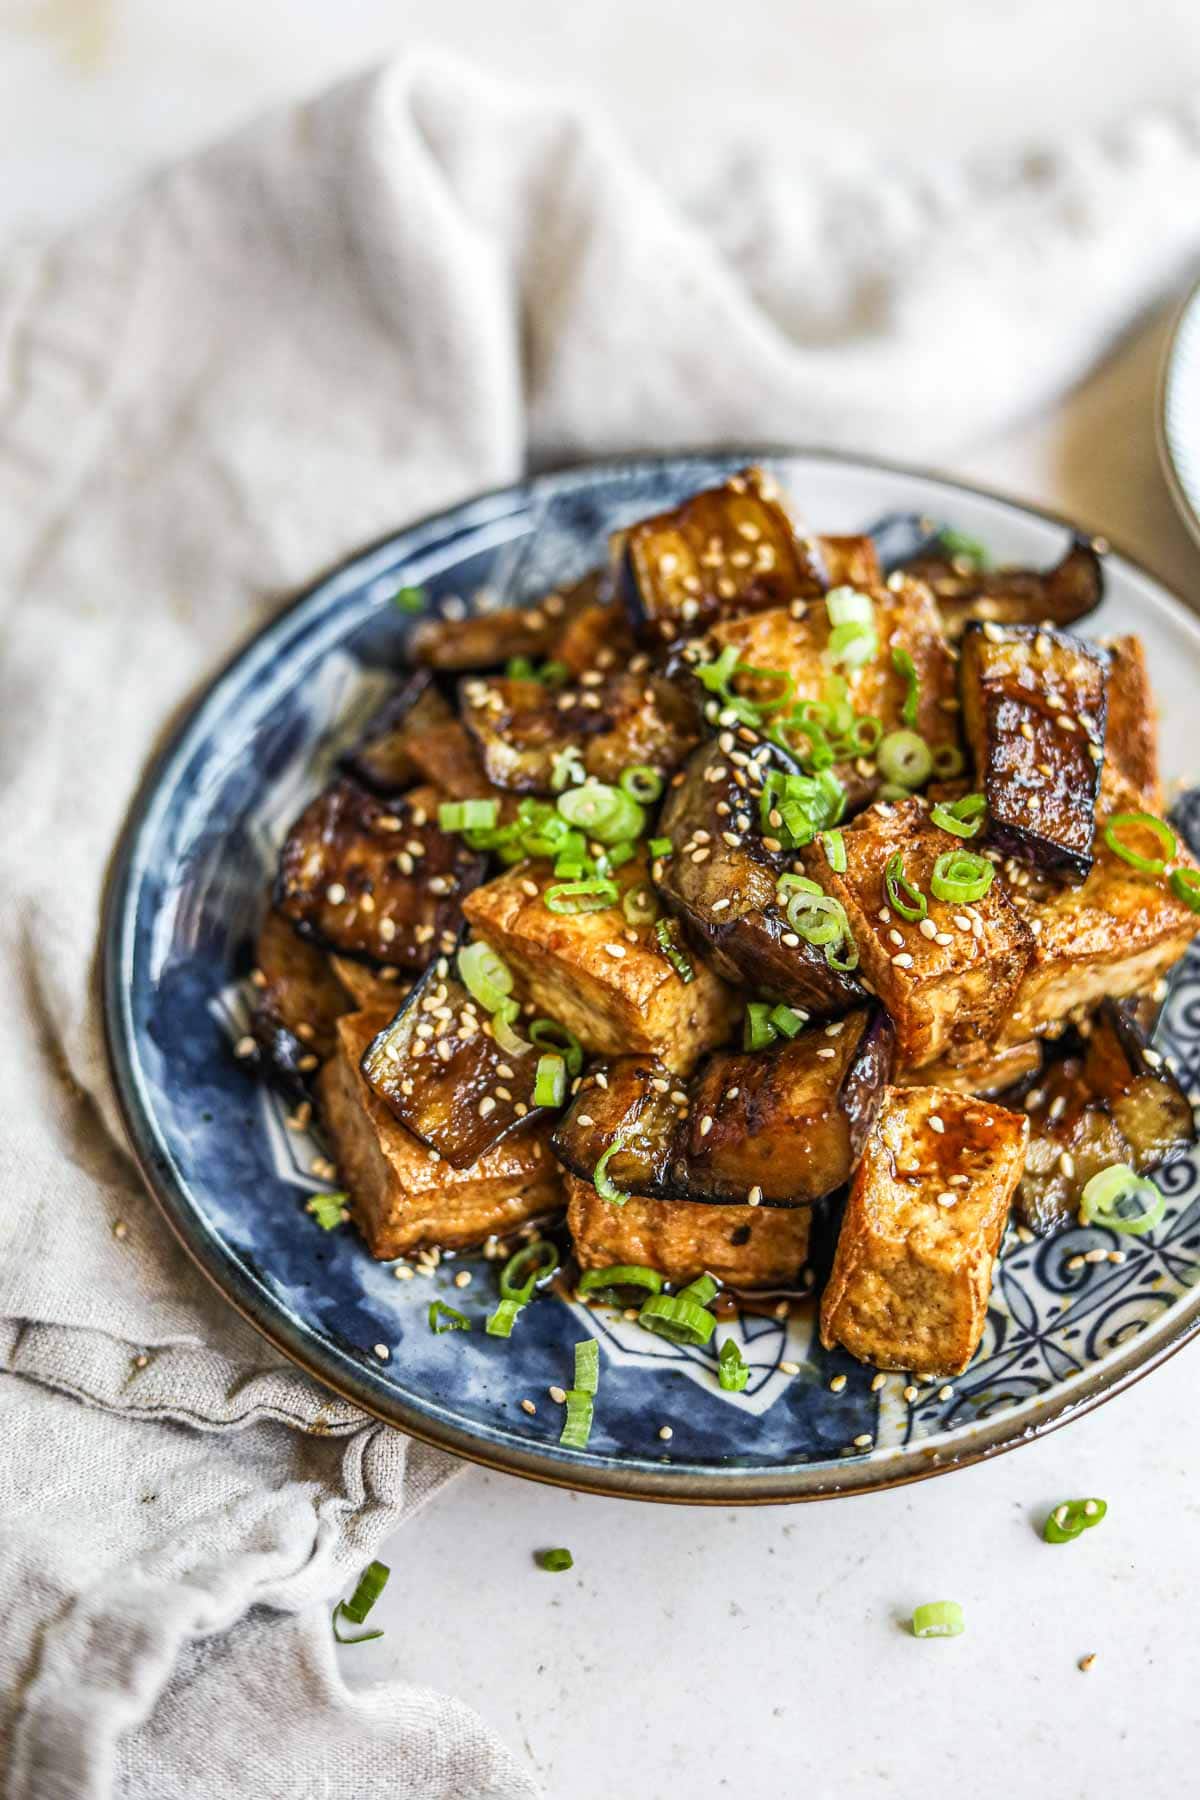 Vegan tofu dish garnished with sesame seeds.